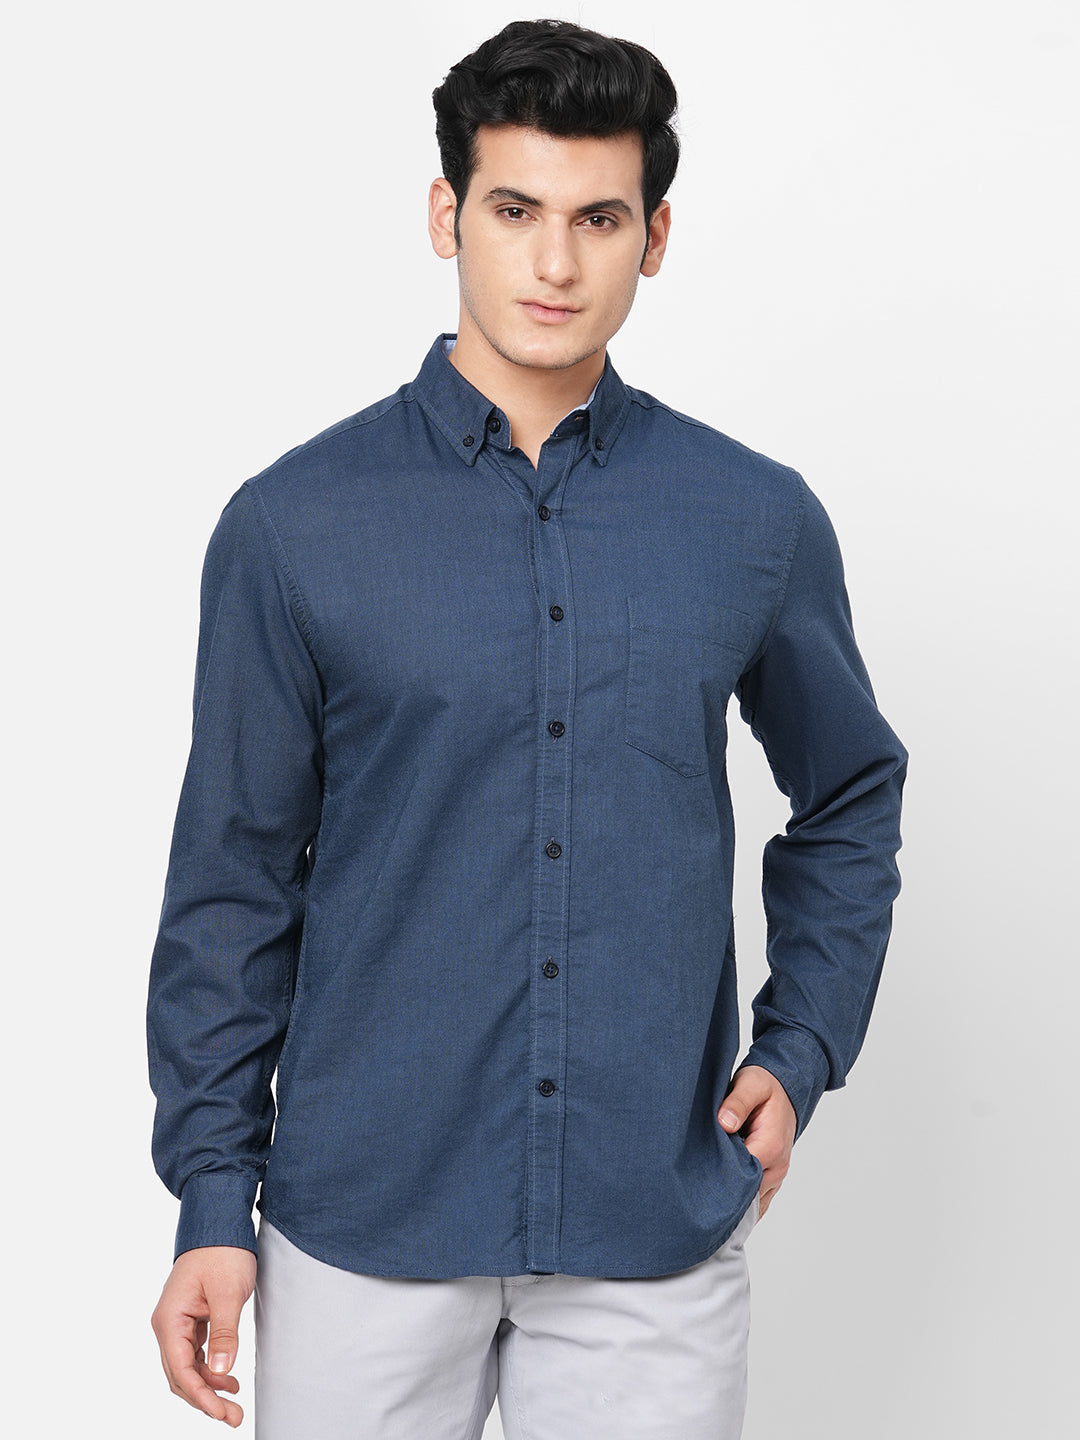 Men's Oxford Cotton Button down Collar Long Sleeved Shirt - Navy